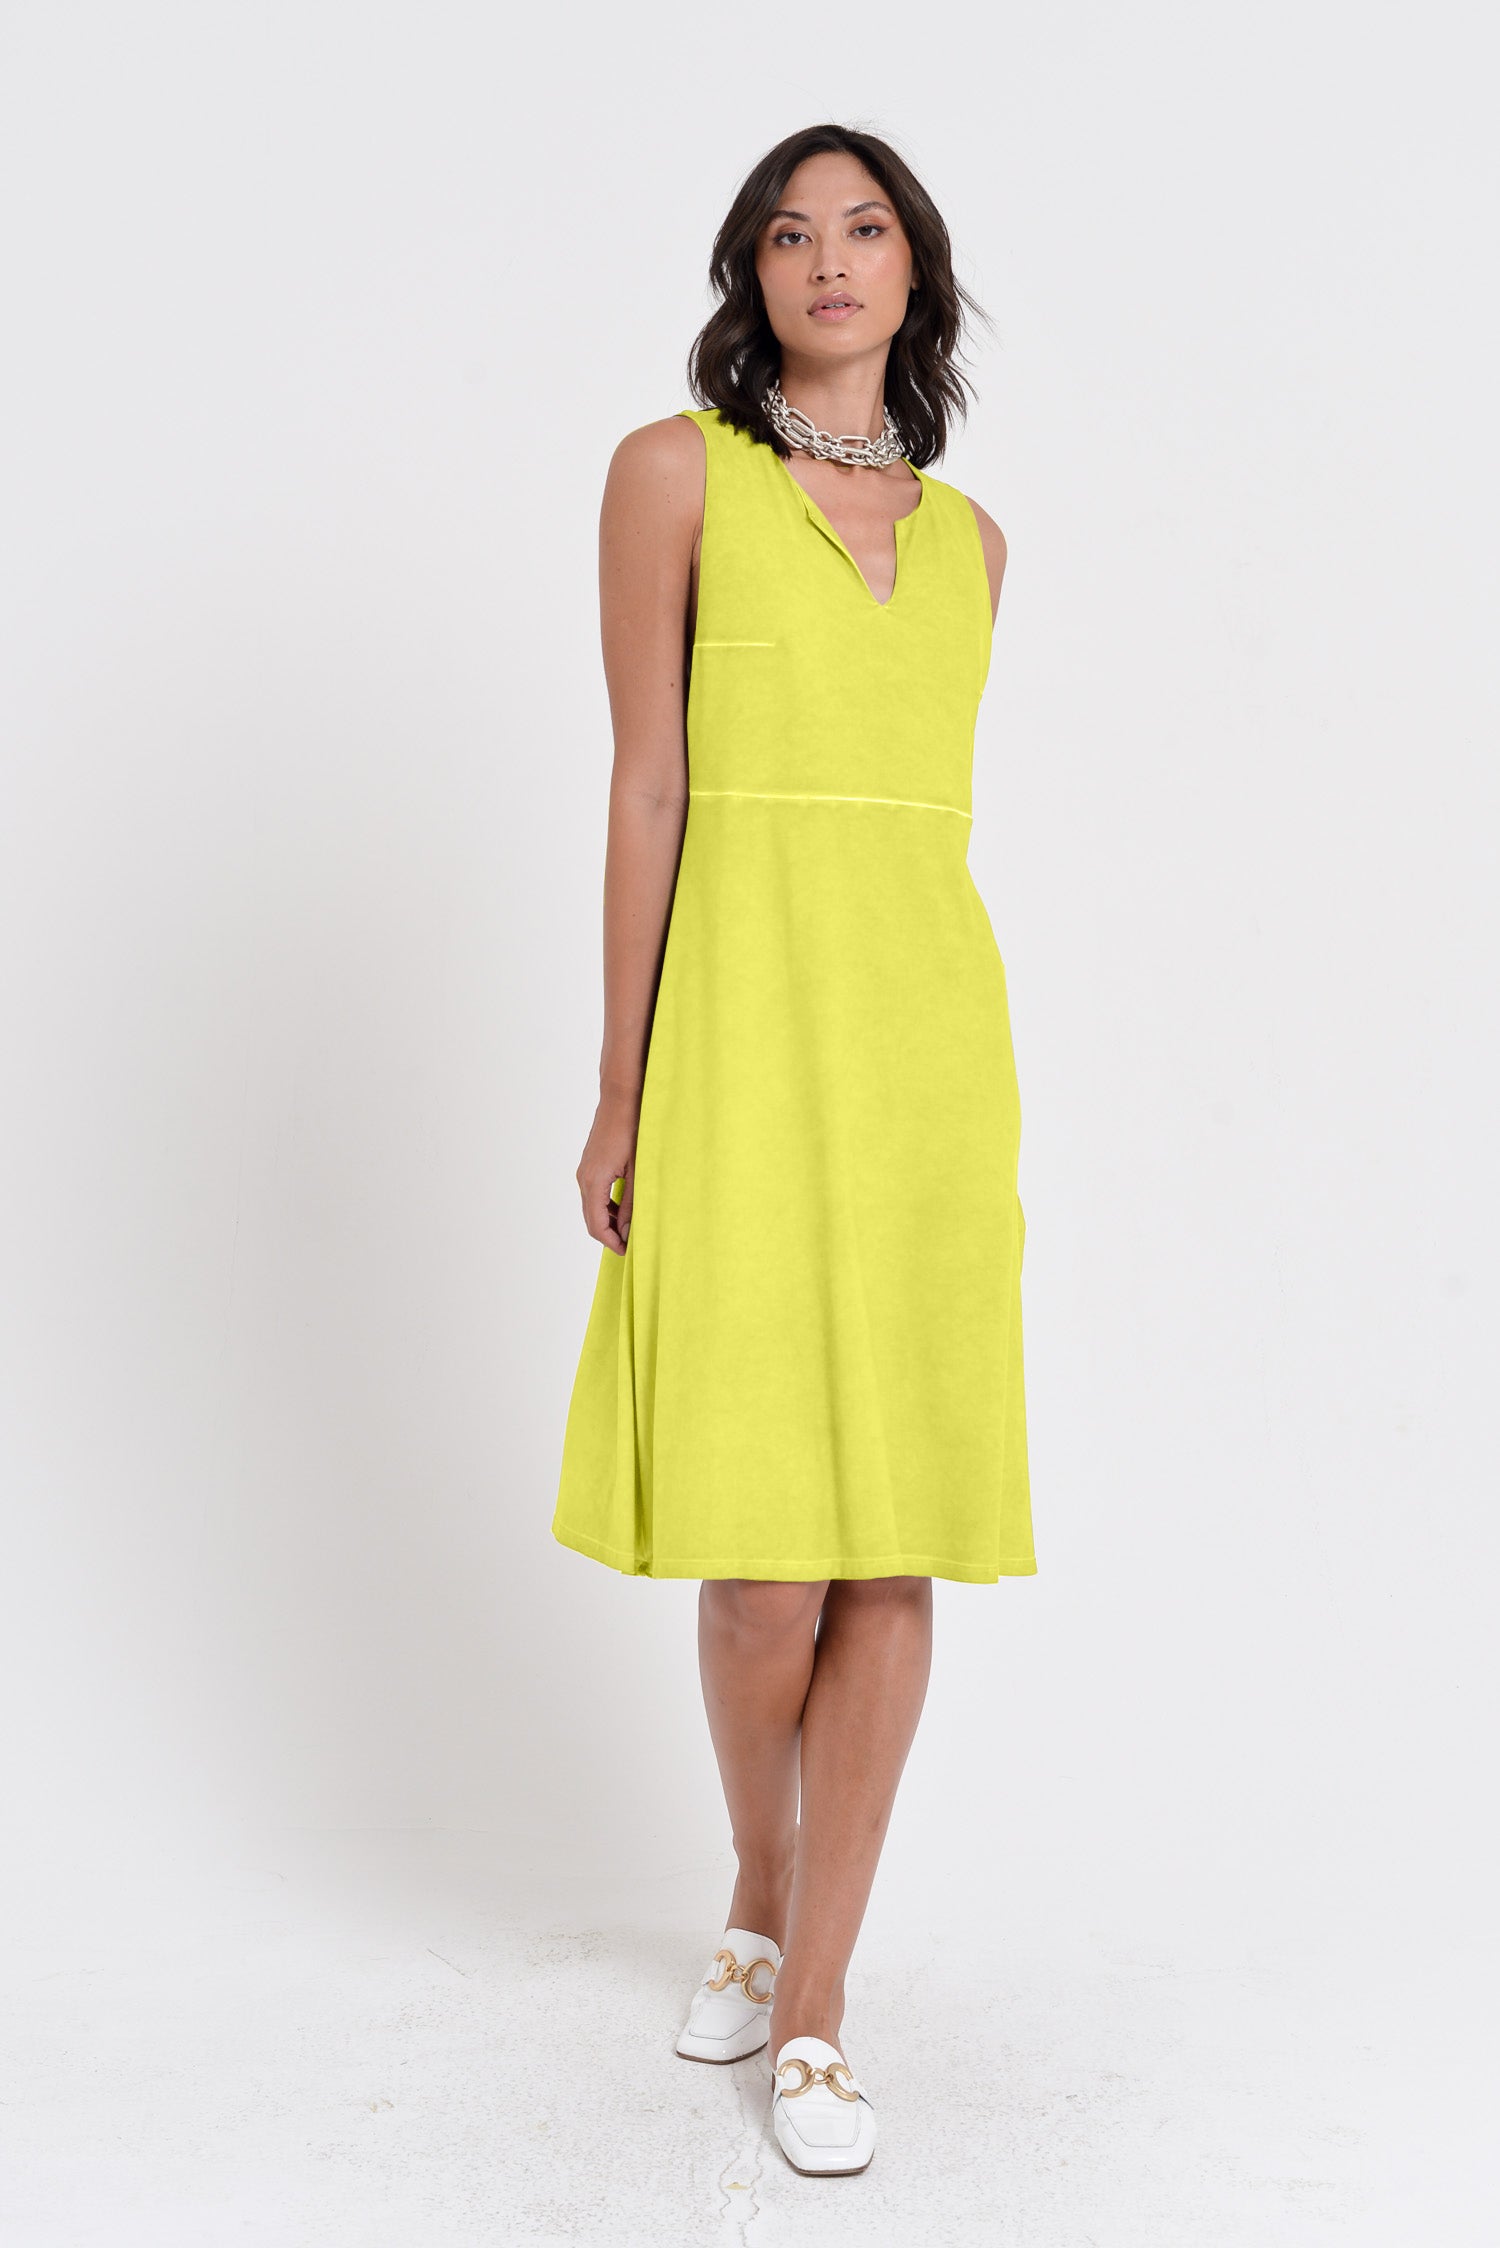 Lucy Dress - Women's Below The Knee Sleeveless Jersey Dress - Lime